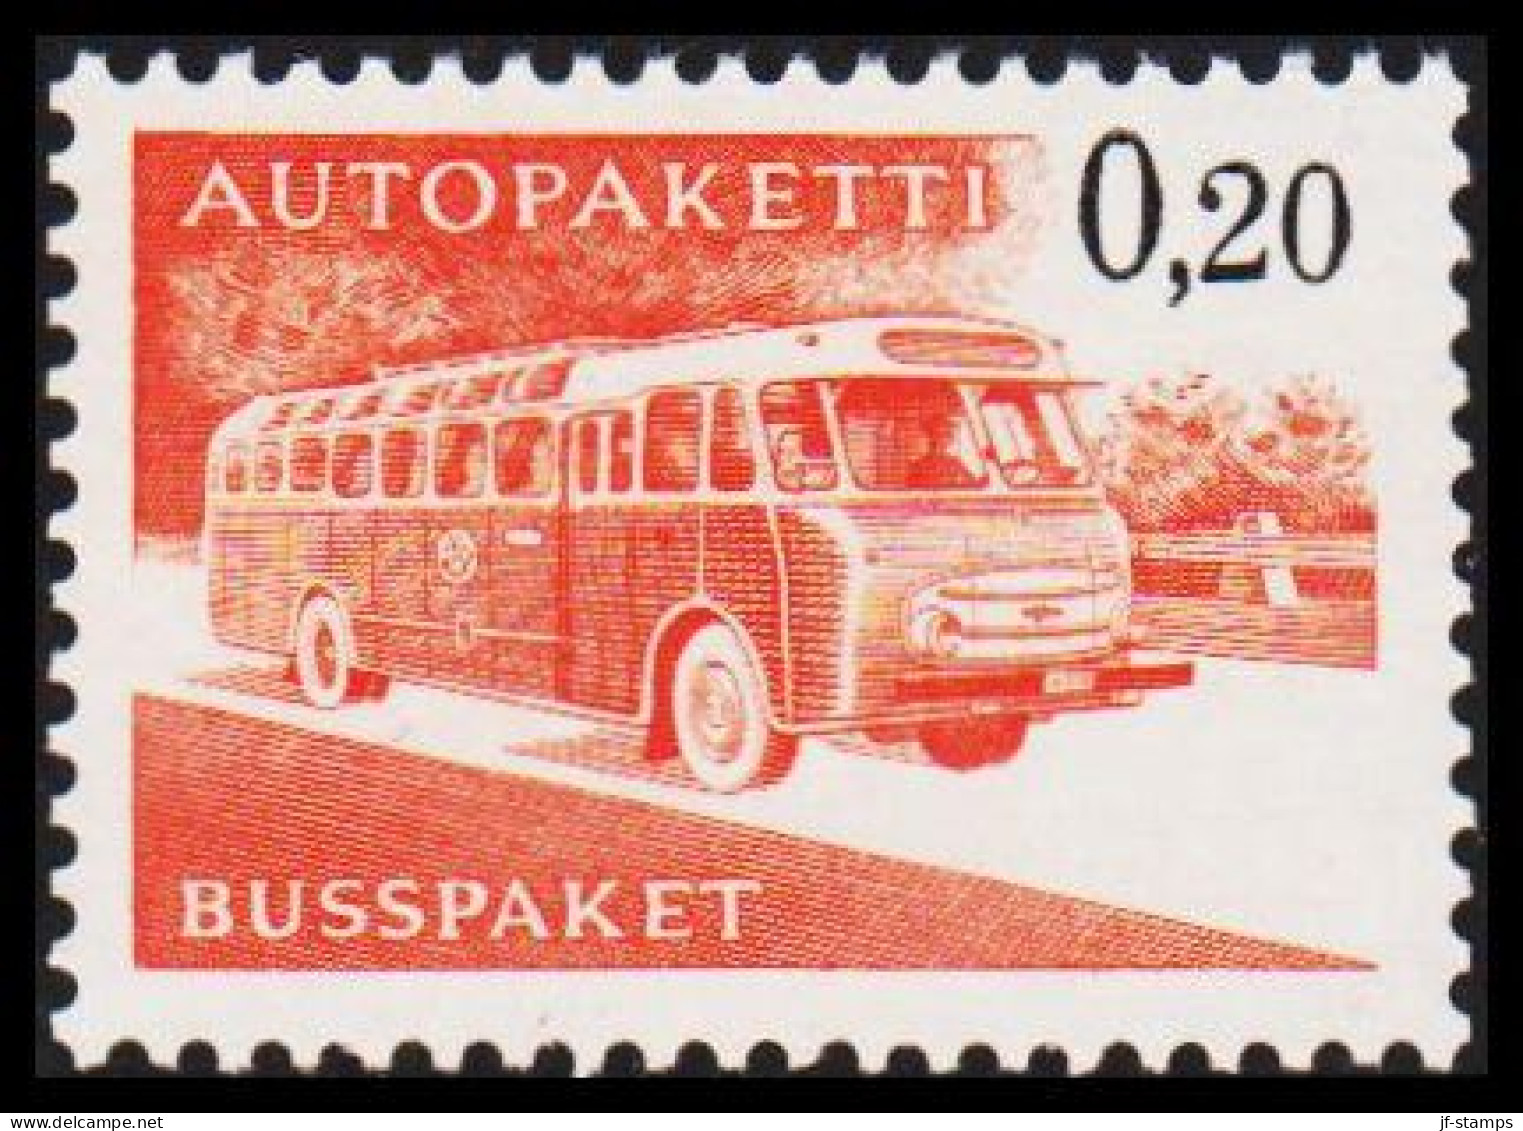 1963-1980. FINLAND. Mail Bus. 0,20 Mk. AUTOPAKETTI - BUSSPAKET Never Hinged. Lumogen. Whit... (Michel AP 11y) - JF535623 - Envios Por Bus